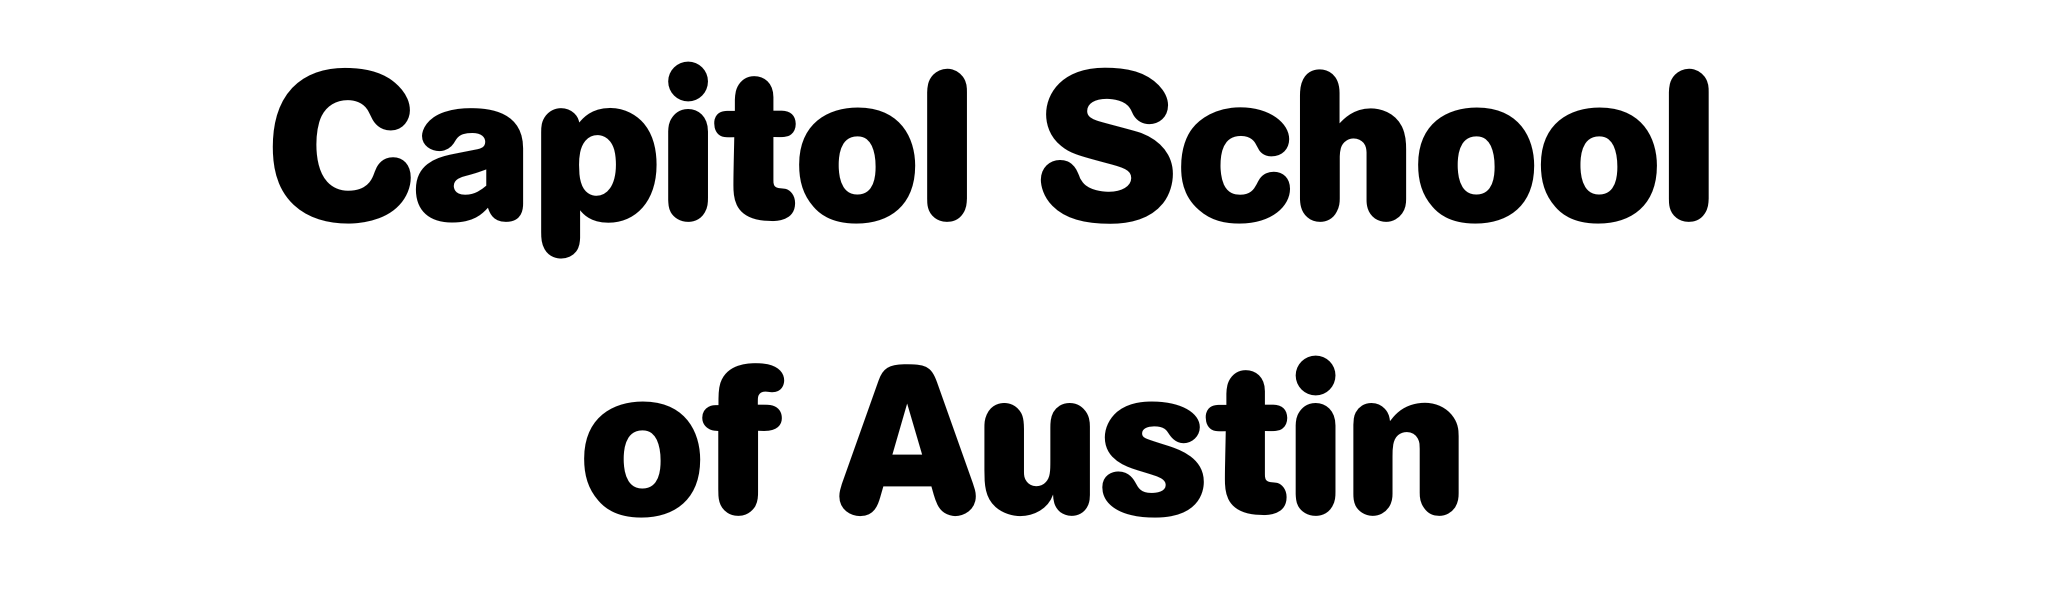 Capitol School of Austin (Silver)